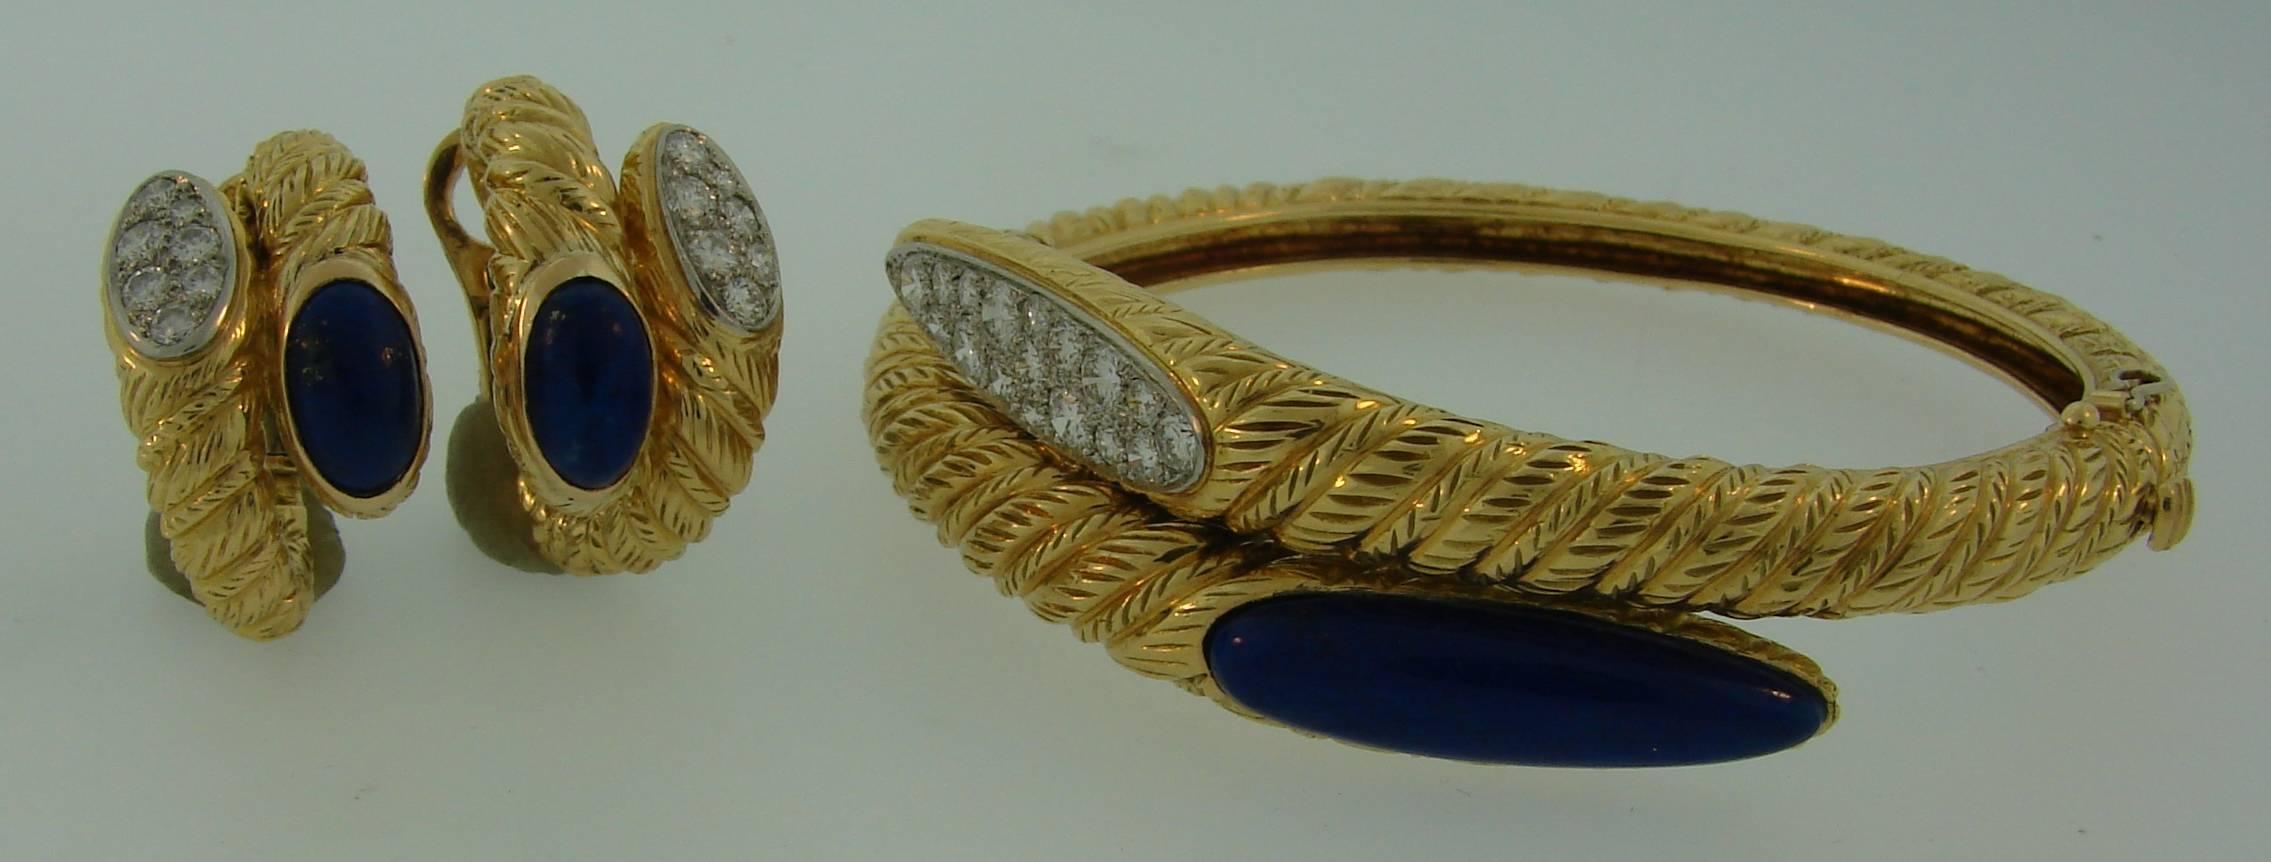 Mixed Cut 1970s Van Cleef & Arpels Lapis Lazuli Diamond Gold Earrings and Bracelet Set